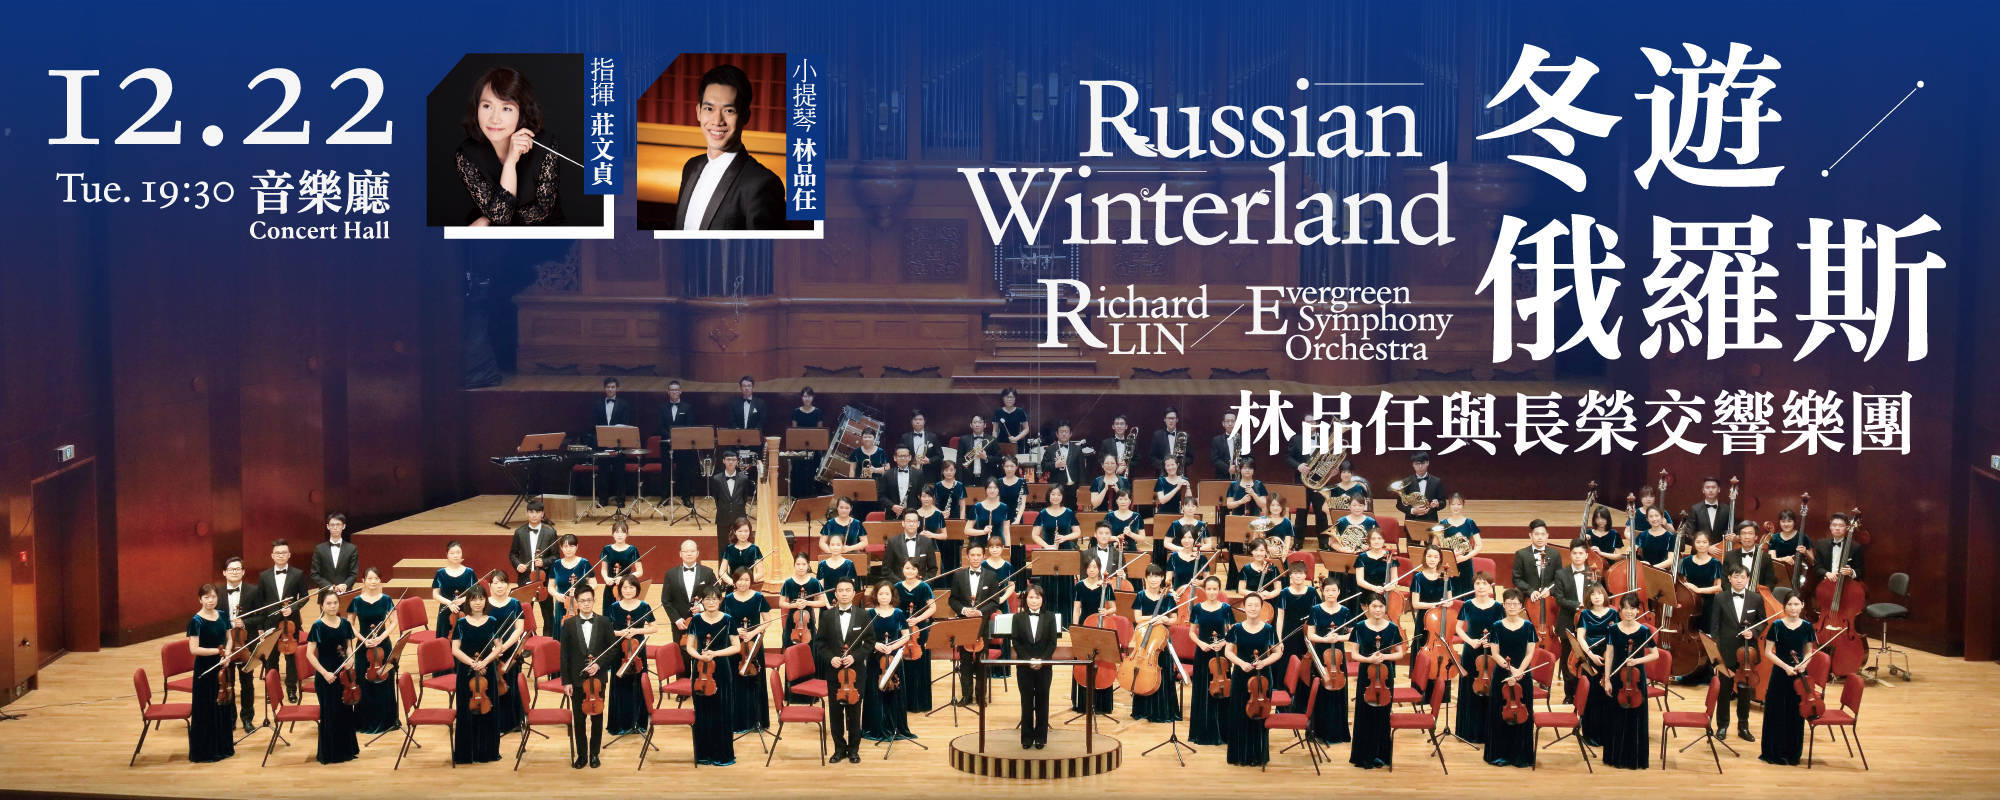 Russian Winterland - Richard LIN X Evergreen Symphony Orchestra 